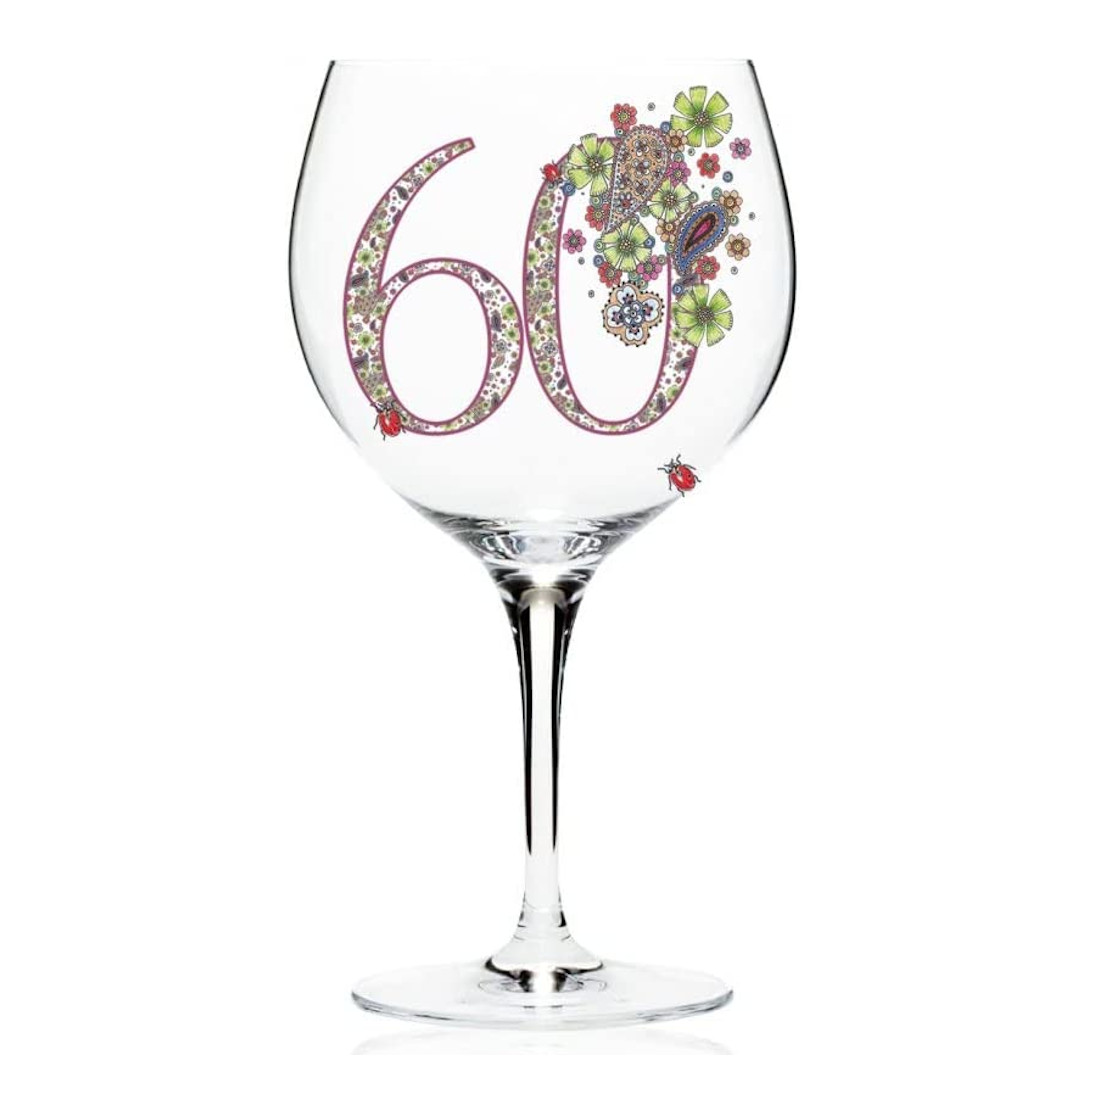 Doodleicious Art - 60th Birthday Celebration Wine / Gin Glass